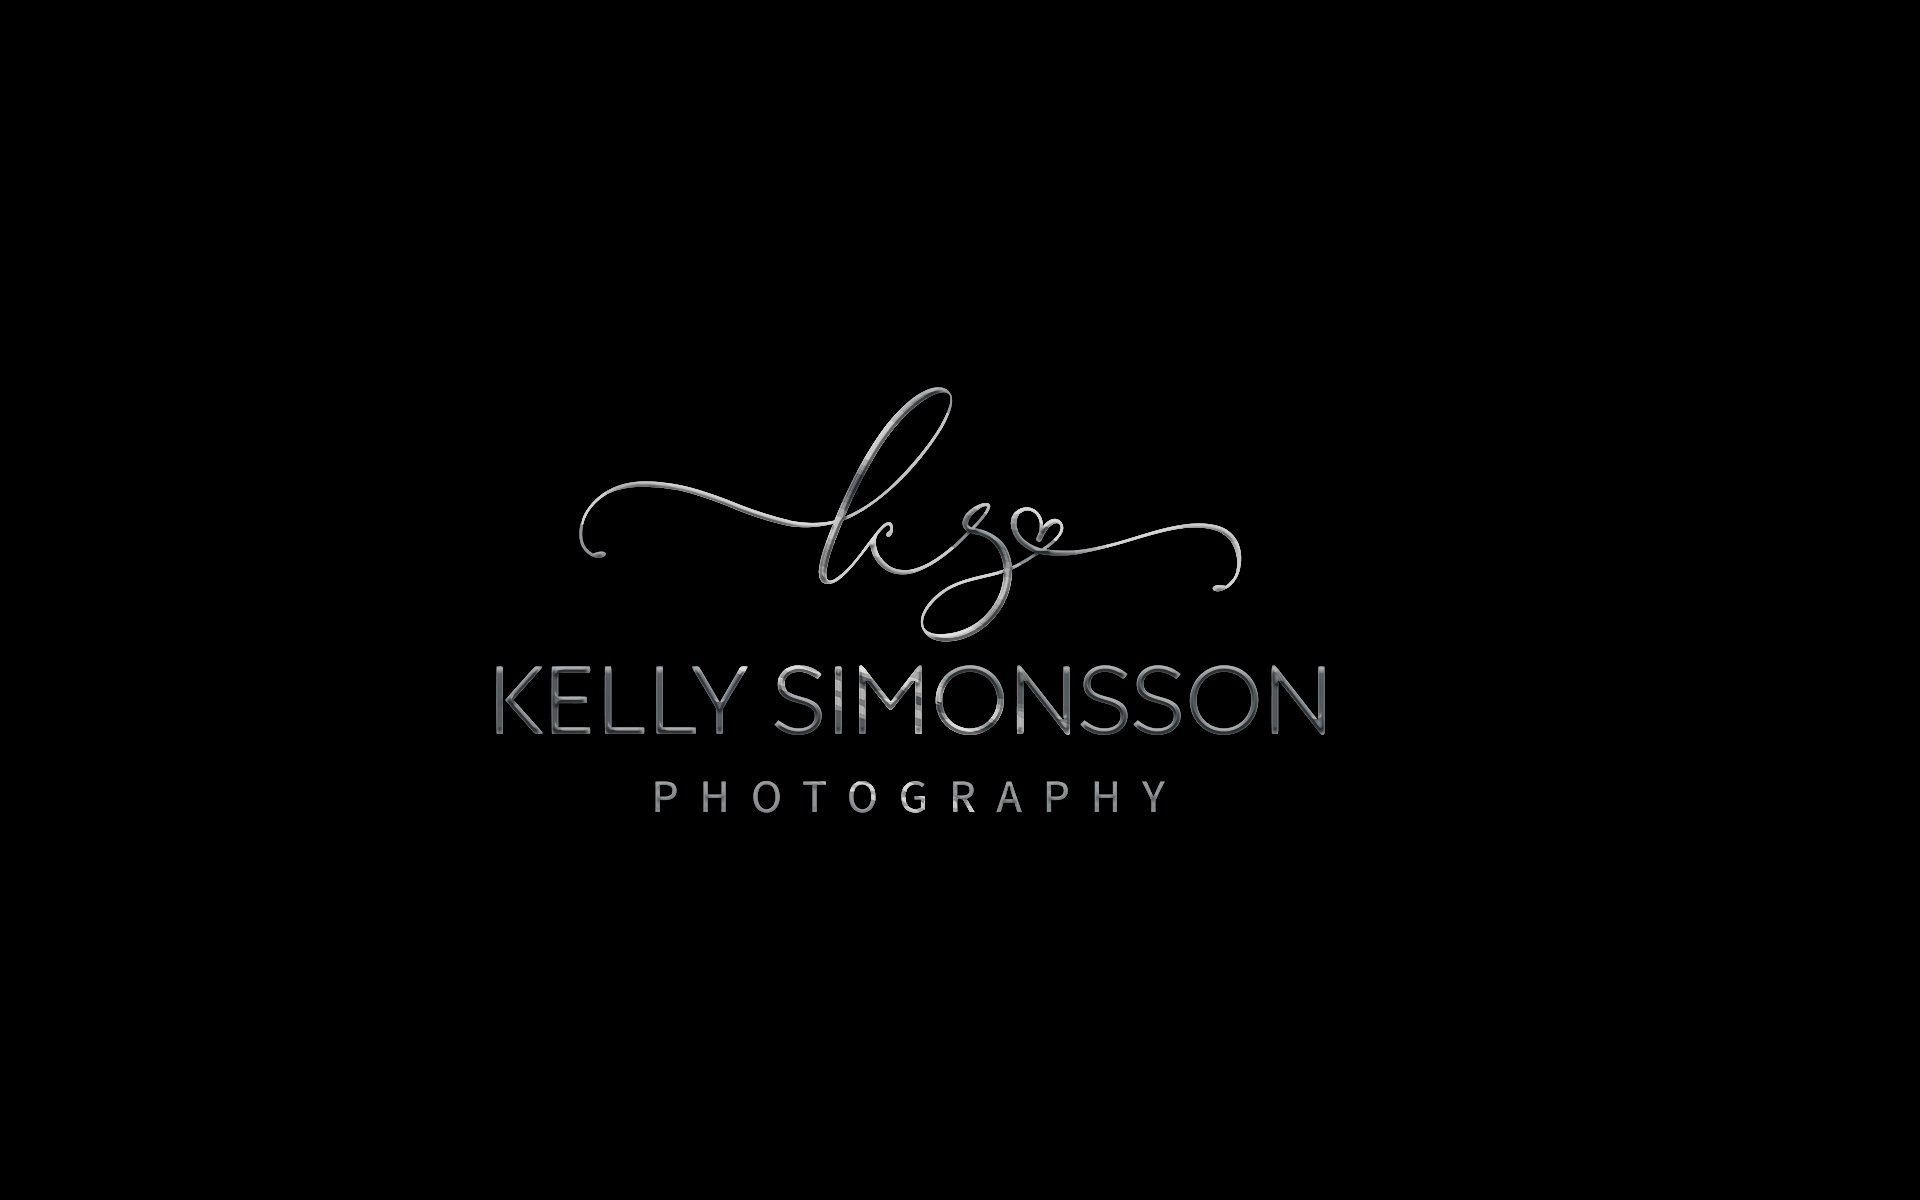 Kelly Simonsson Photography